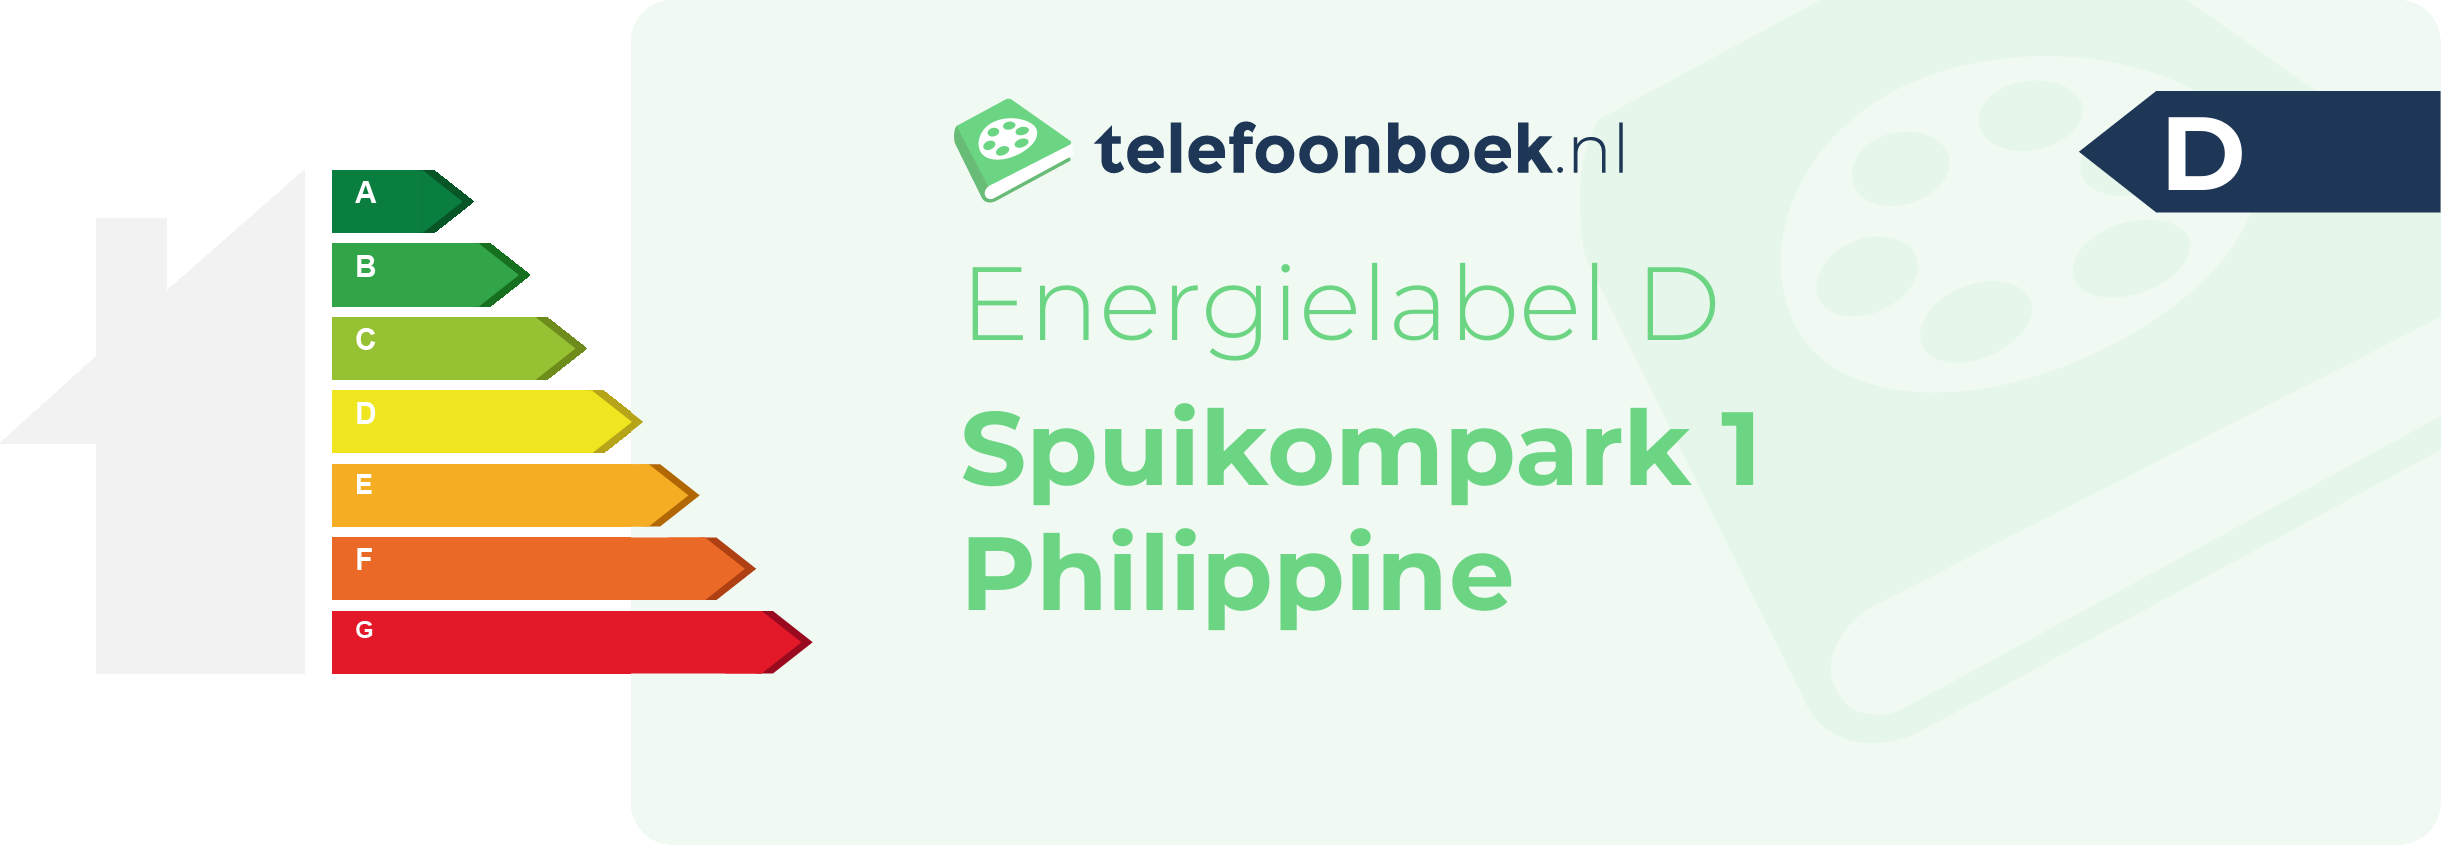 Energielabel Spuikompark 1 Philippine